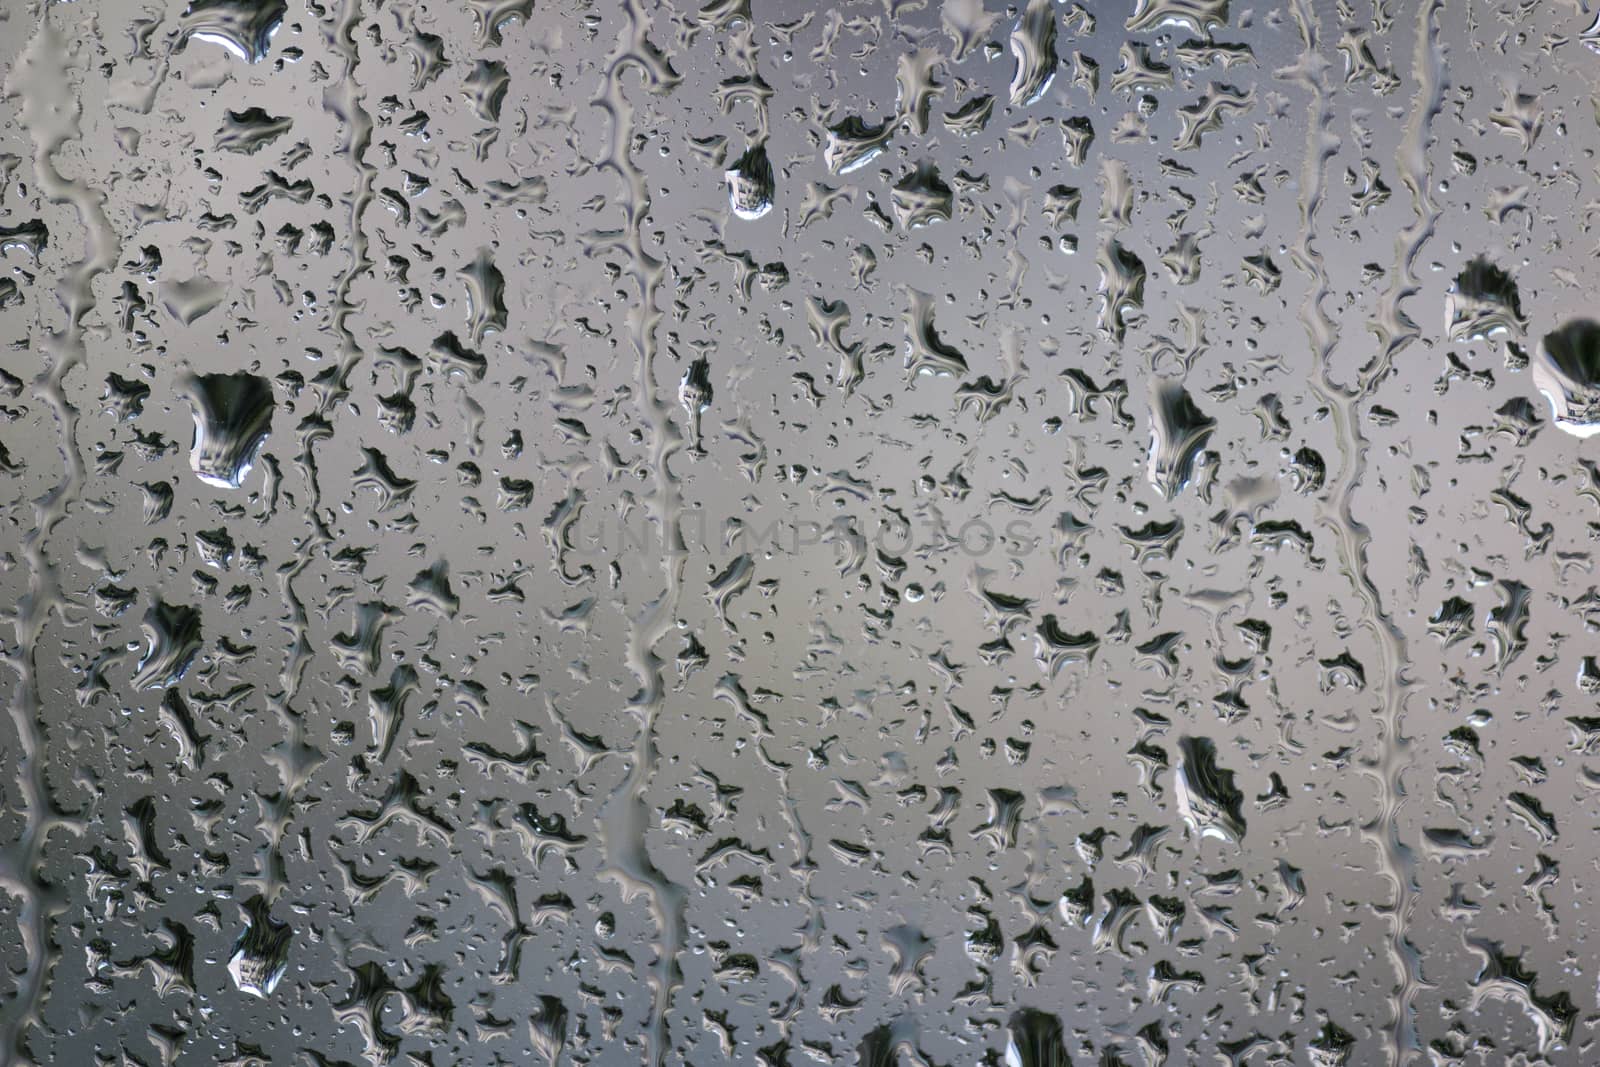 Rain drops on a windows by Kidza